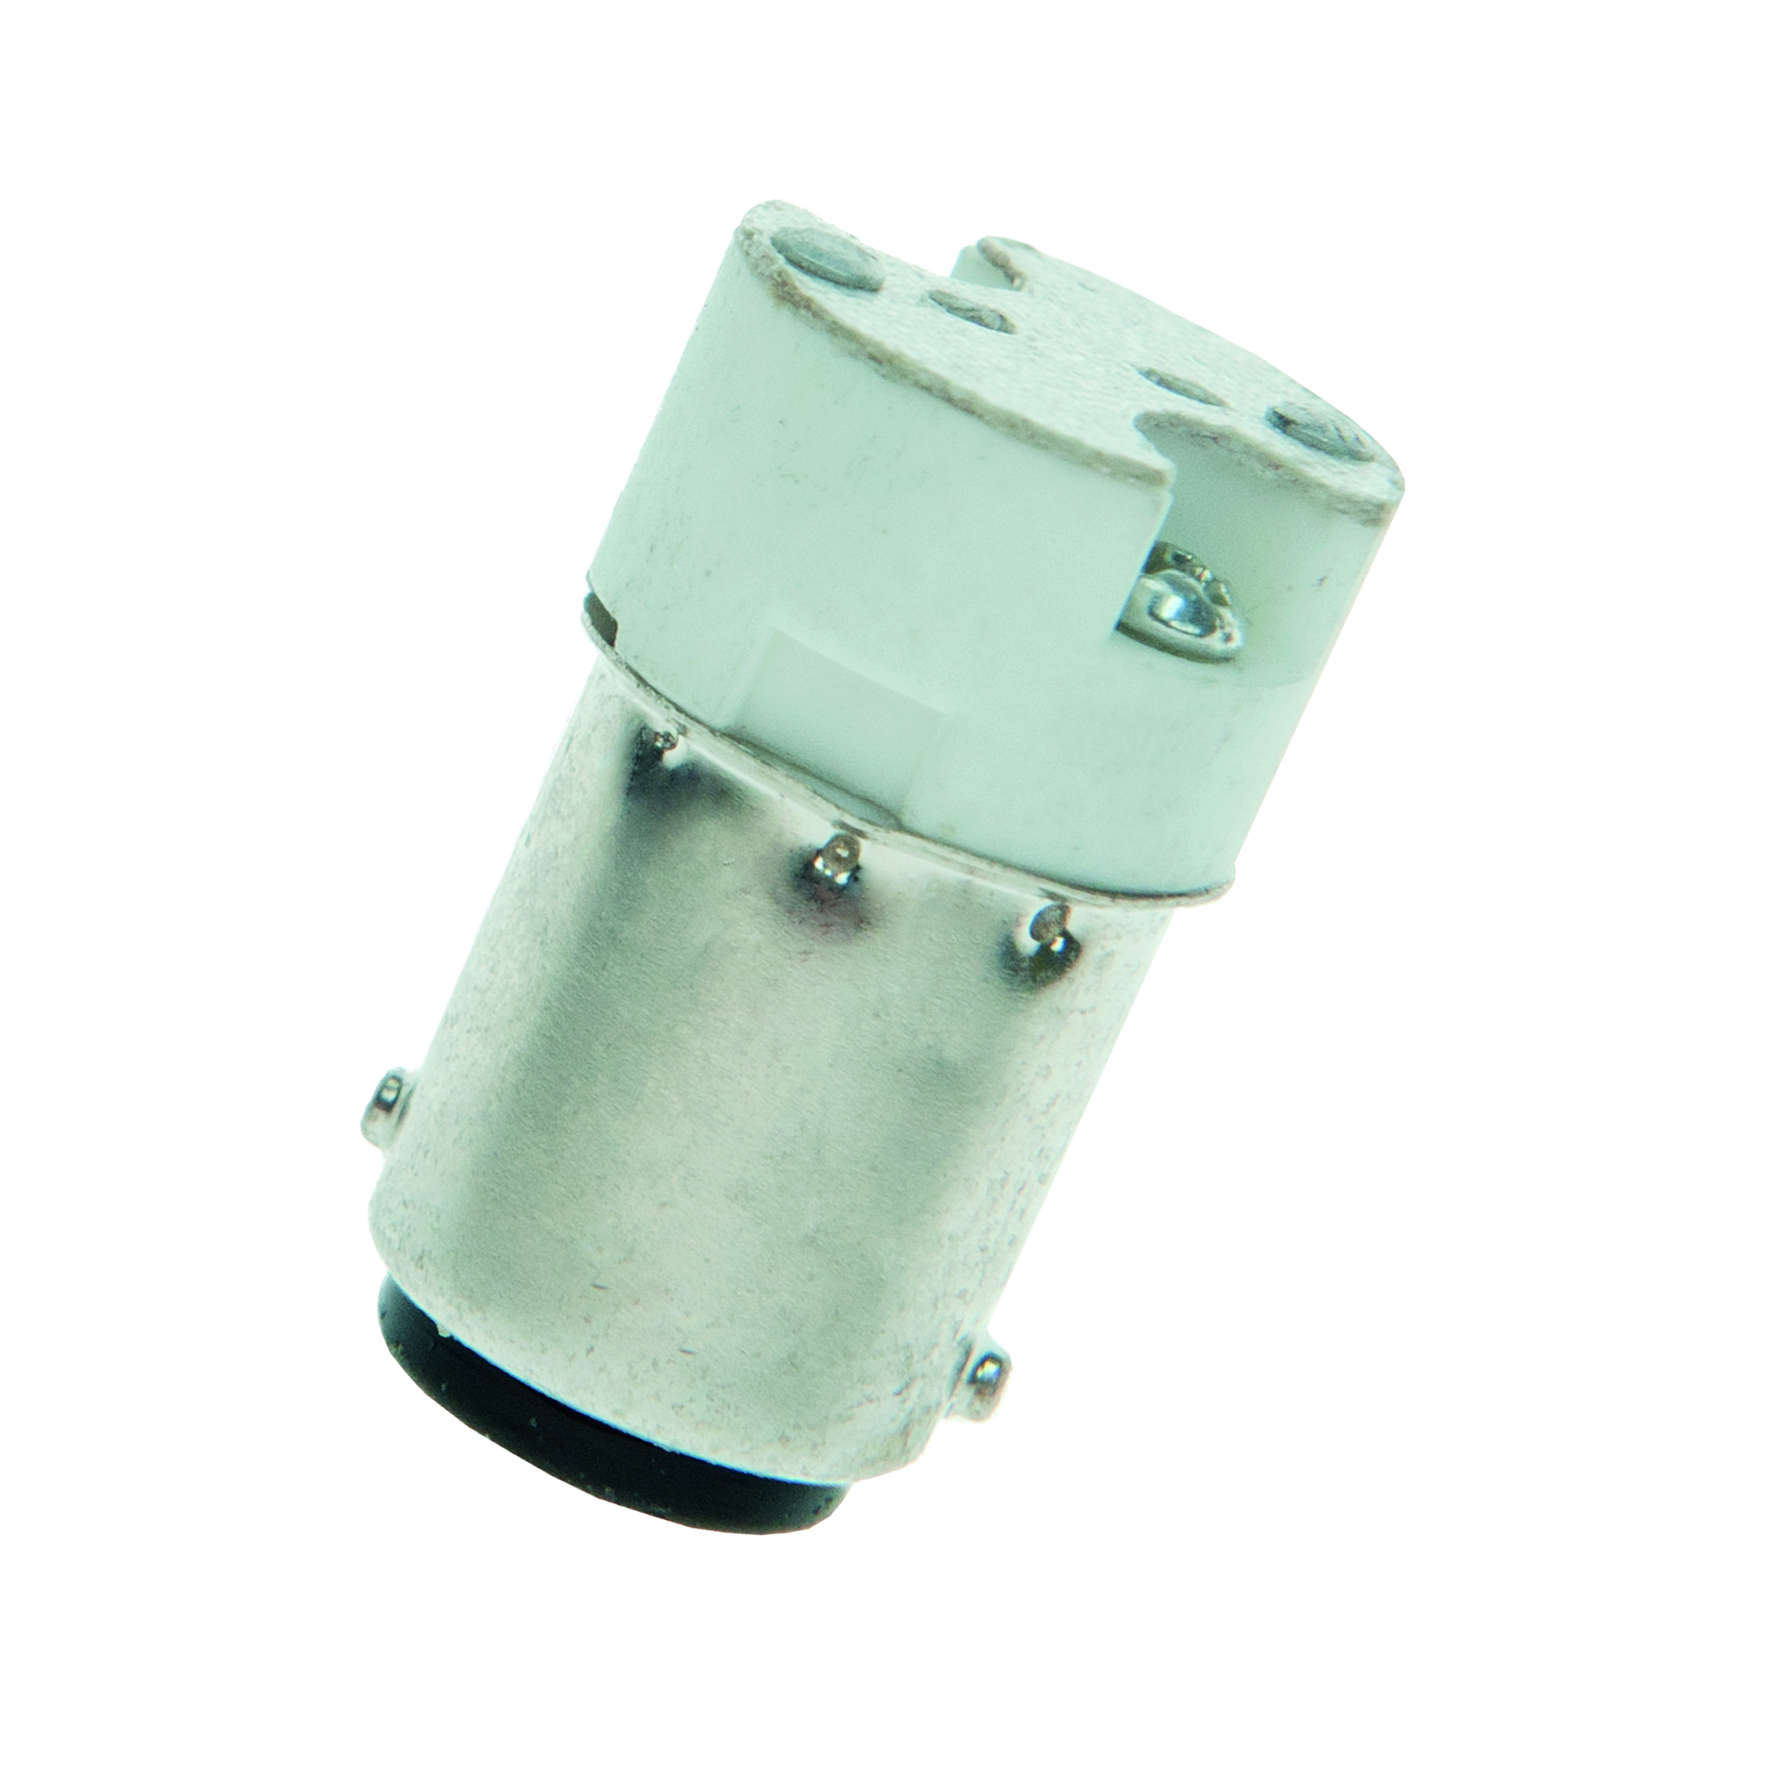 Osram Parathom Spot LED GU4 MR11 4.5W 345lm 36D - 927 Blanc Très